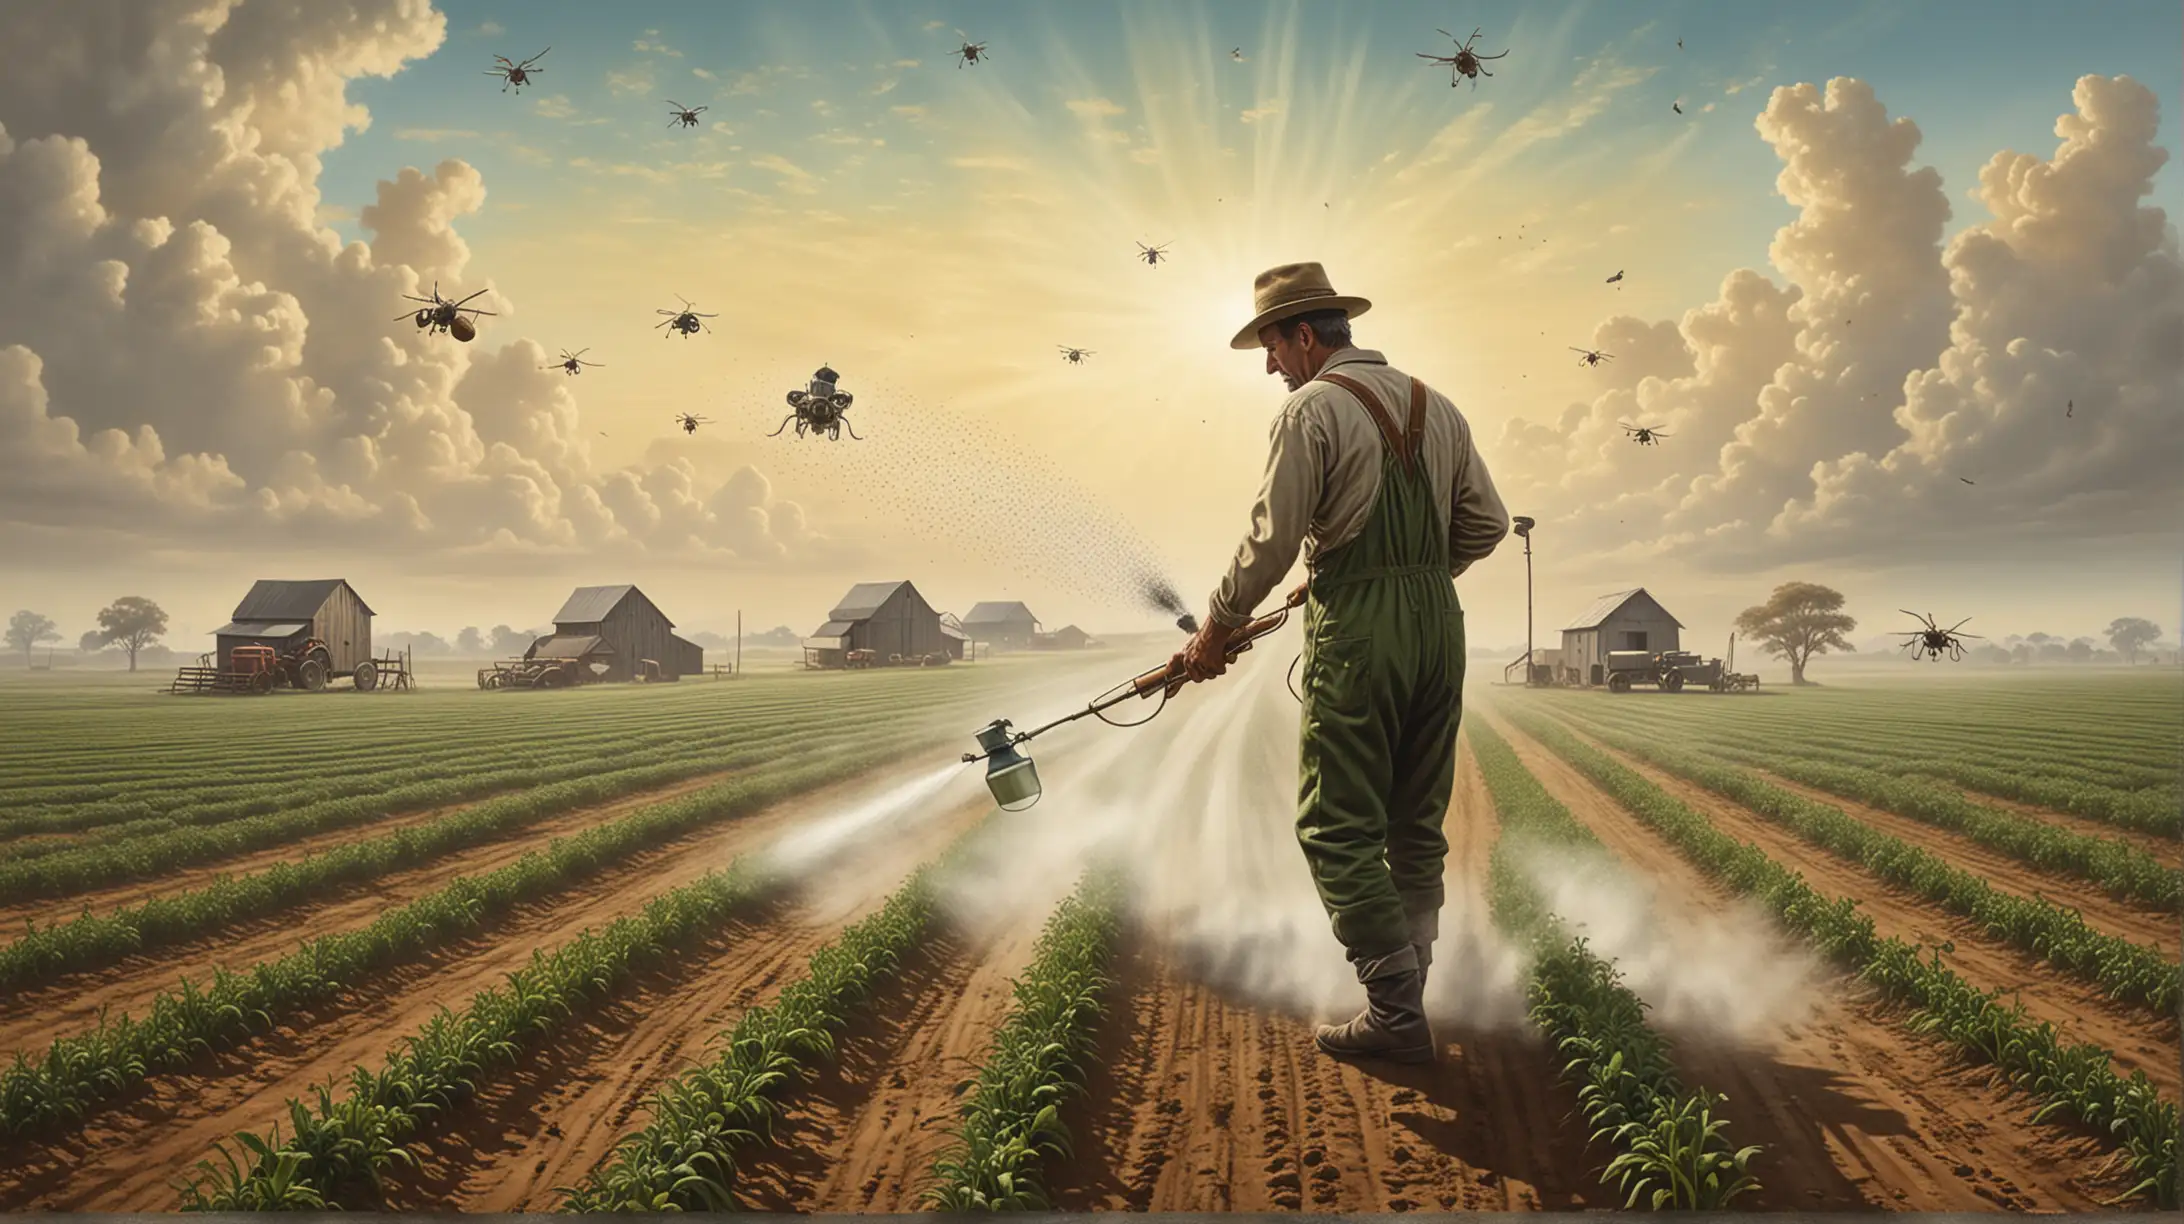 surrealist artwork of farmer spraying pesticides